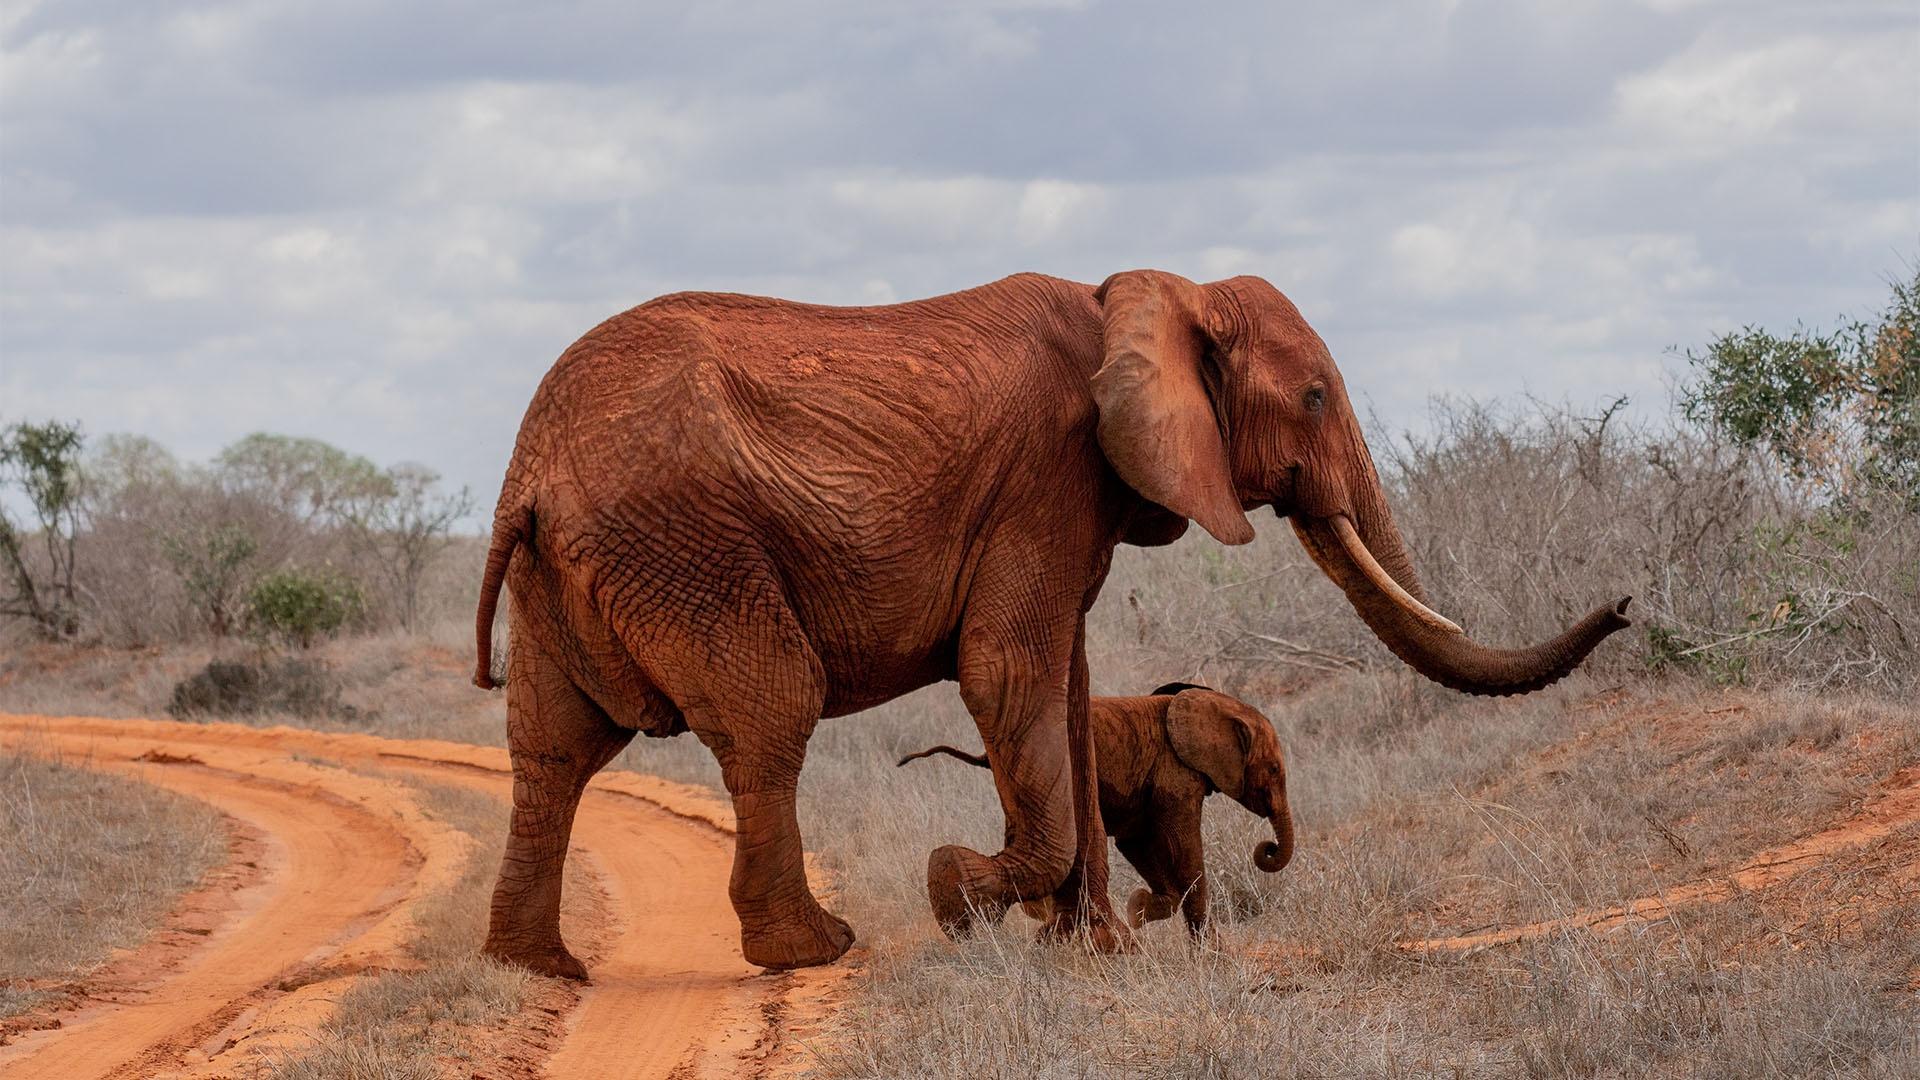 An elephant and calf in Kenya.